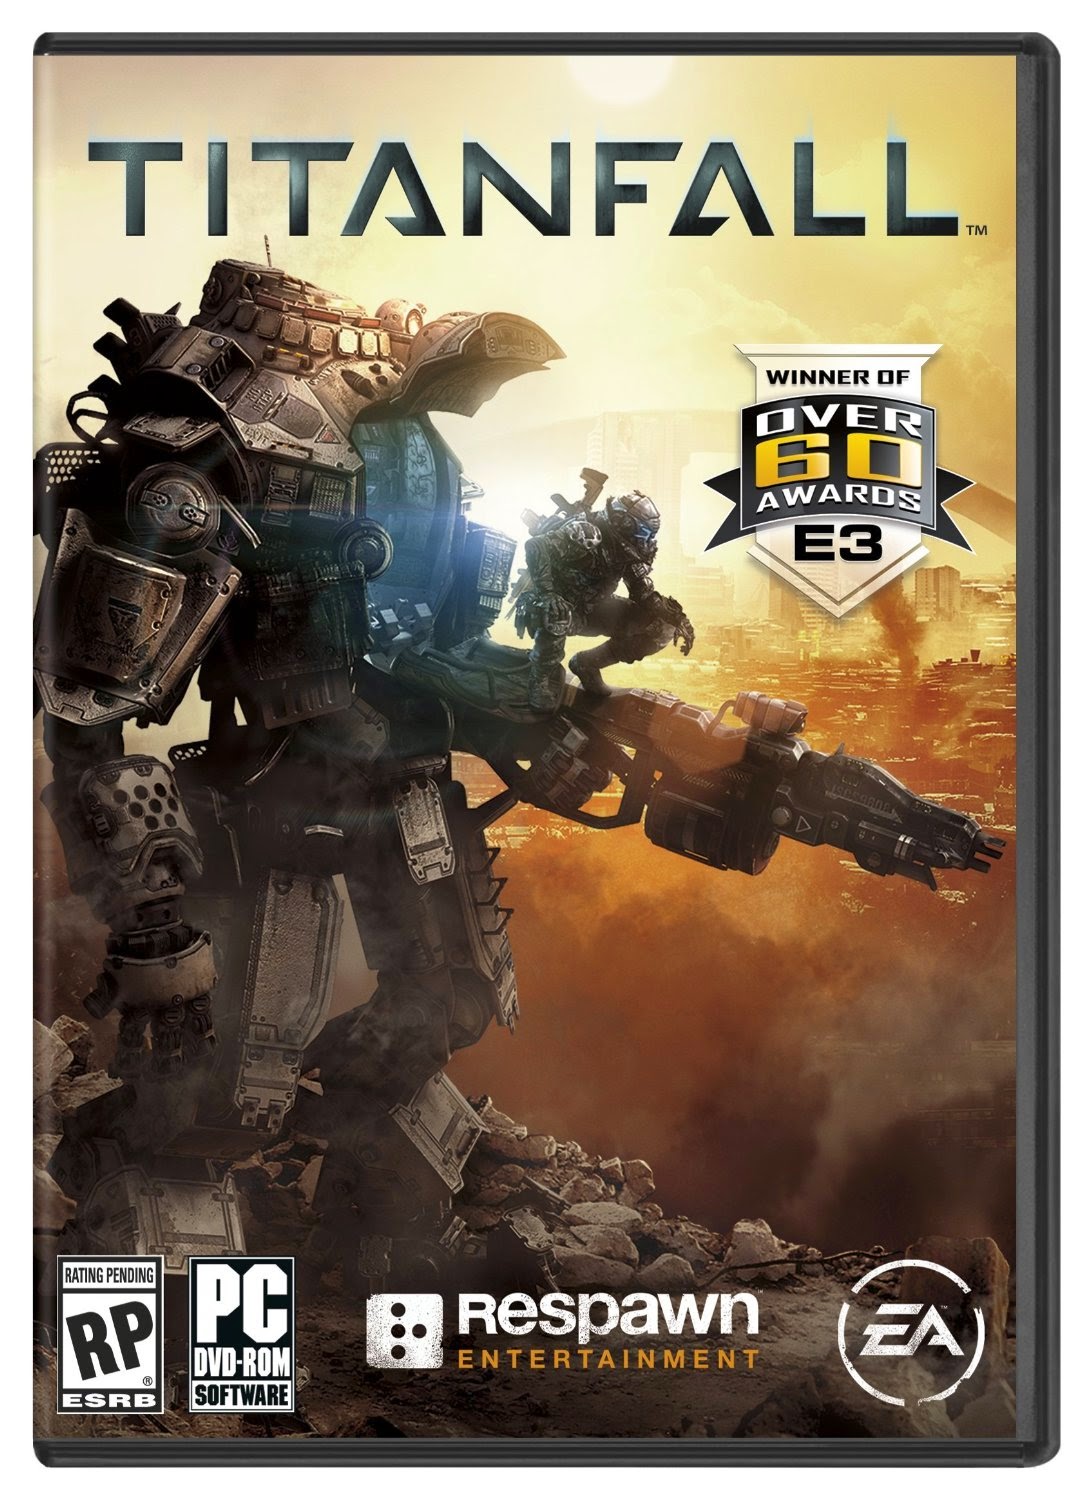 Titanfall 2 PC Game Download